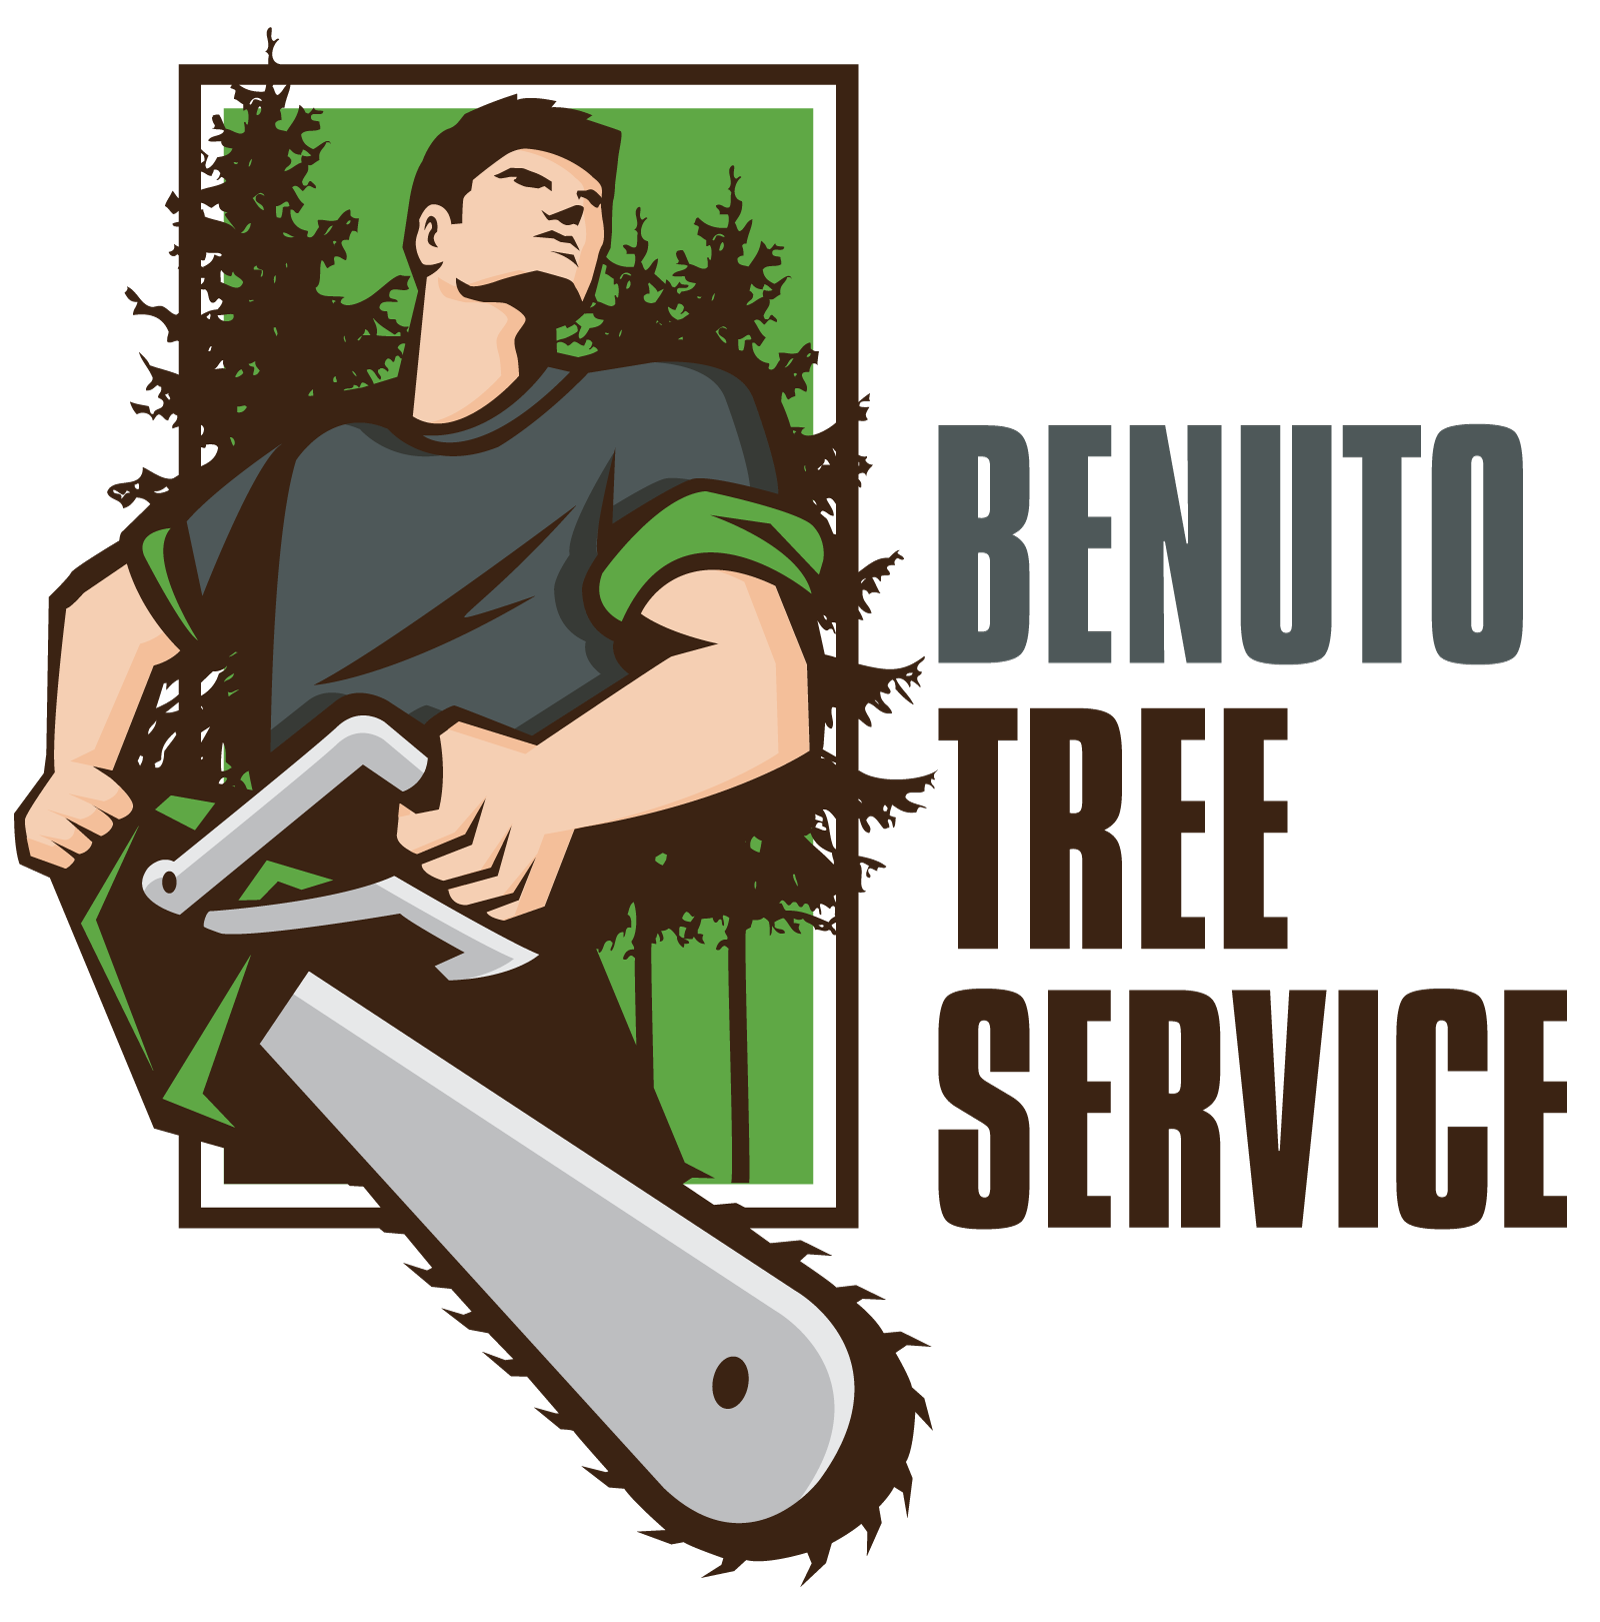 Benuto Tree Service